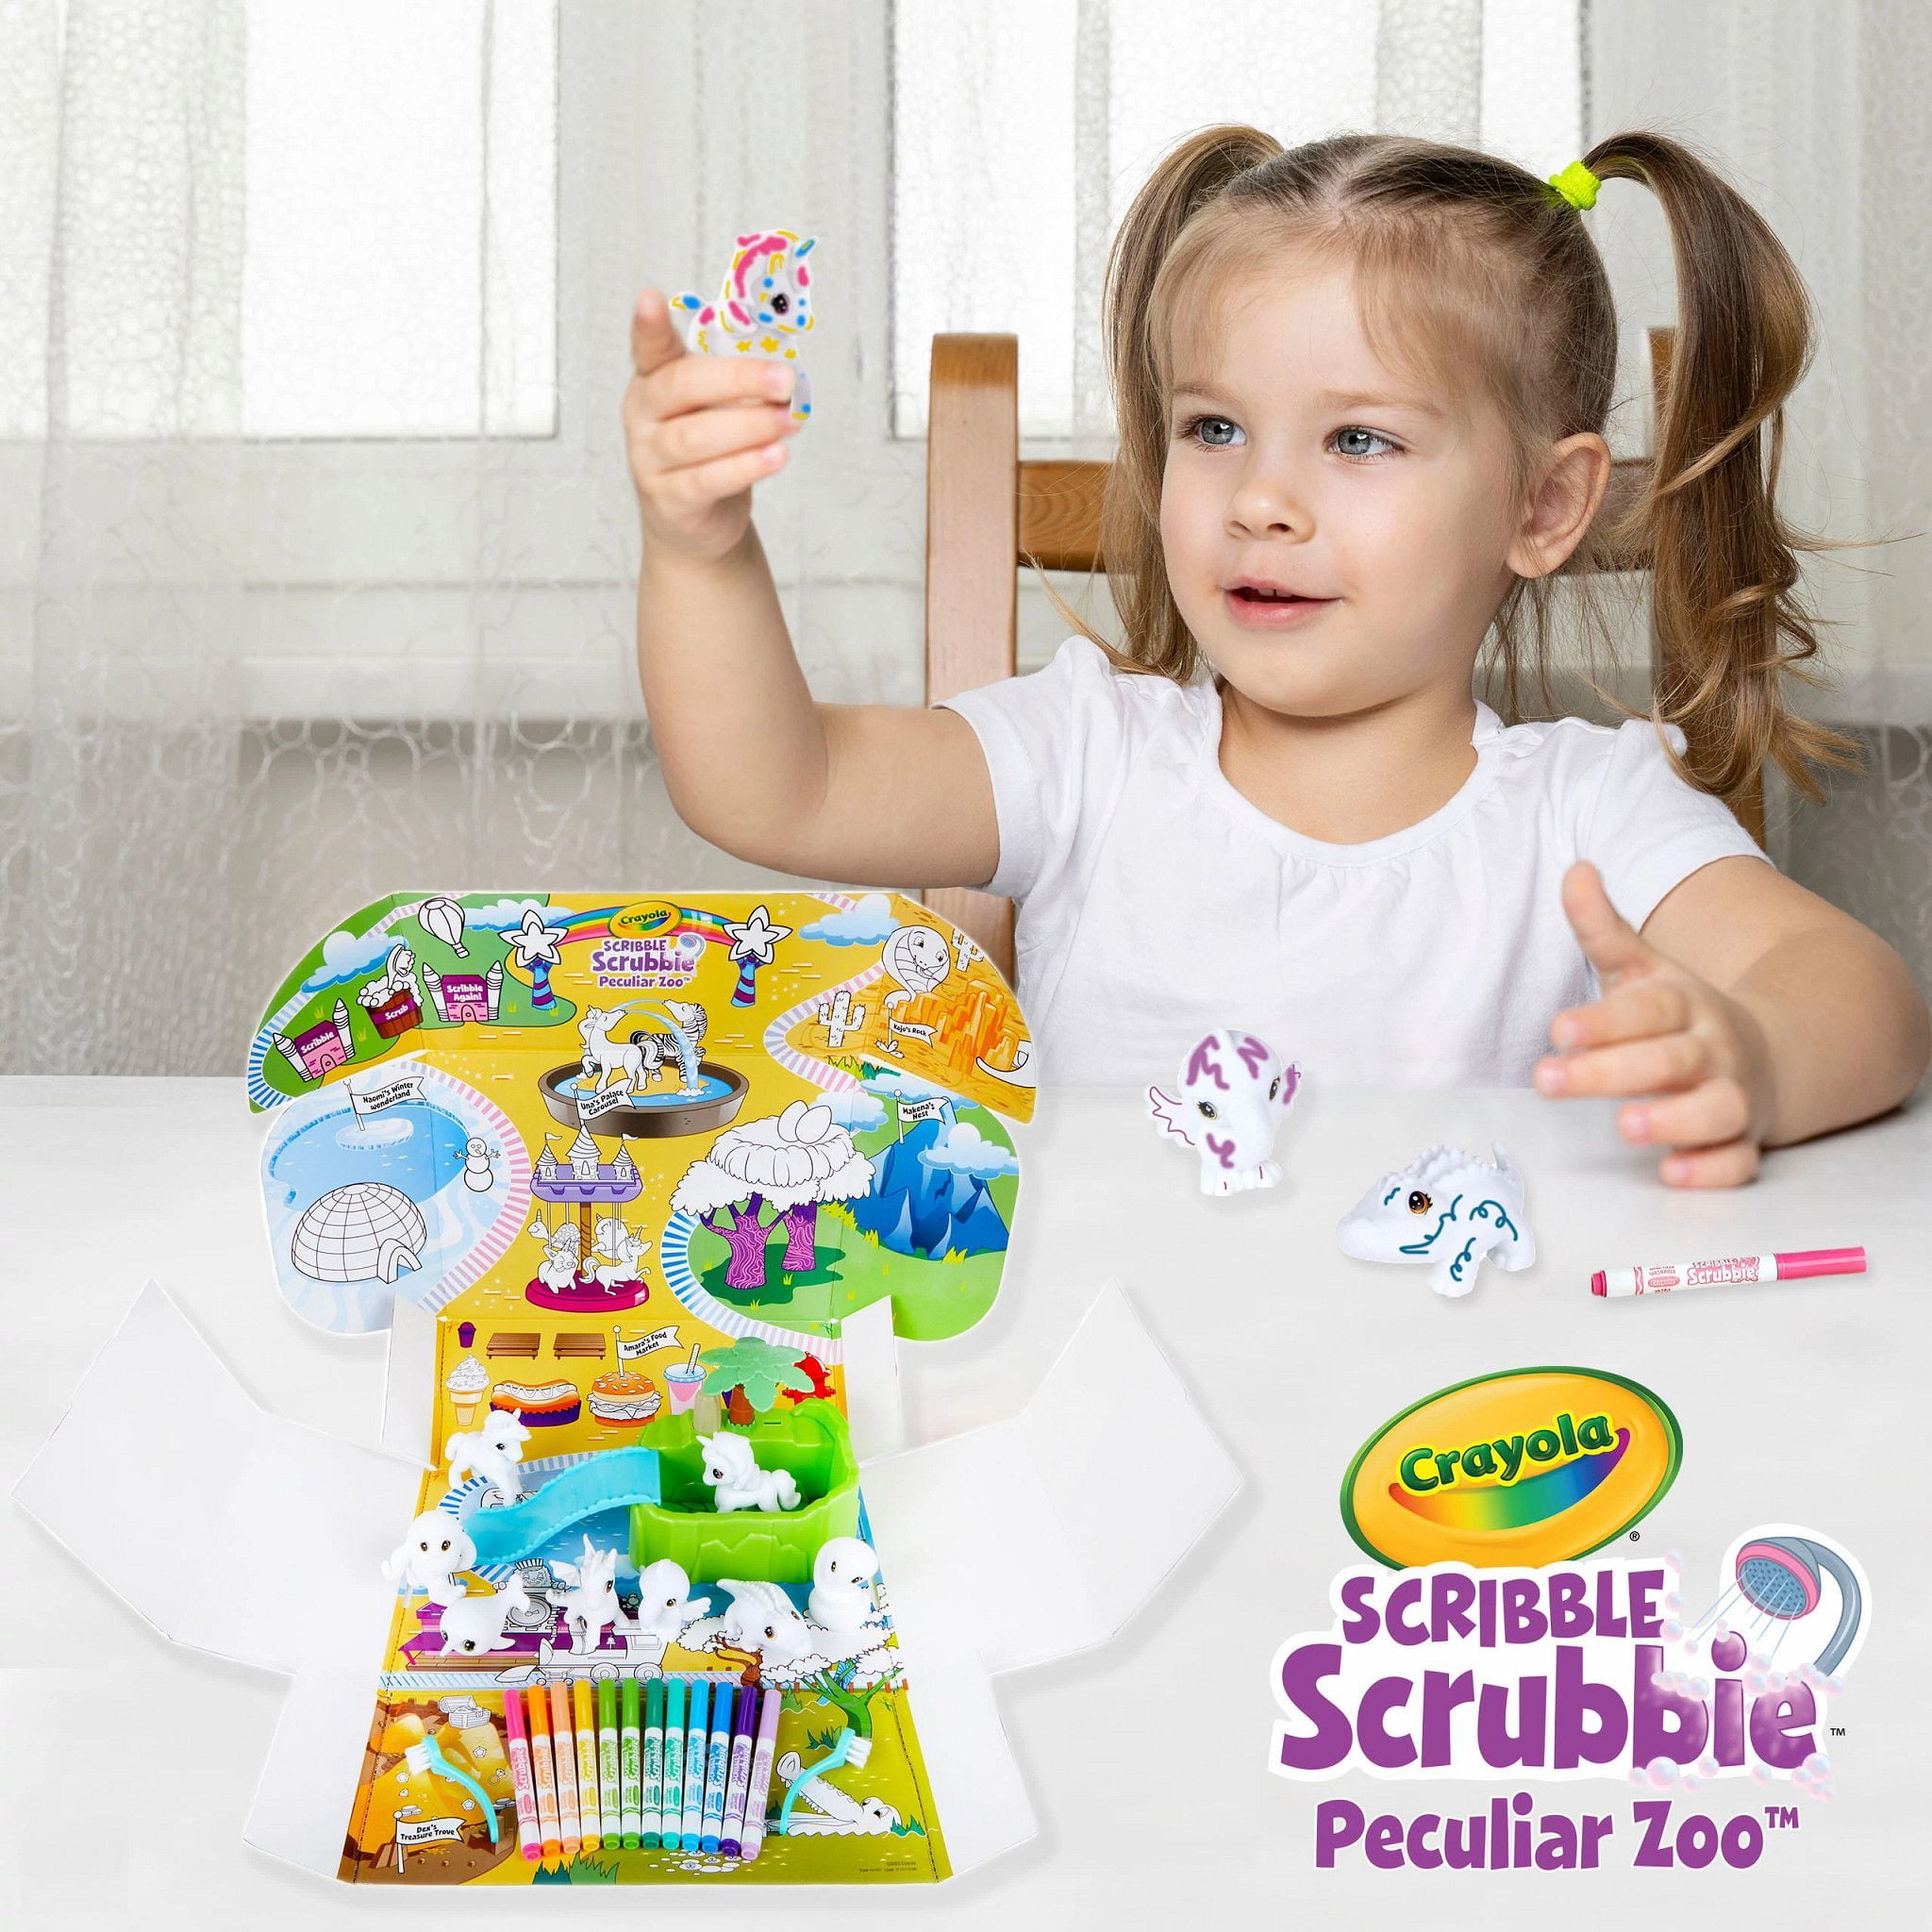 Crayola Scribble Scrubbie Peculiar Pets, Pet Care Toy - Macy's